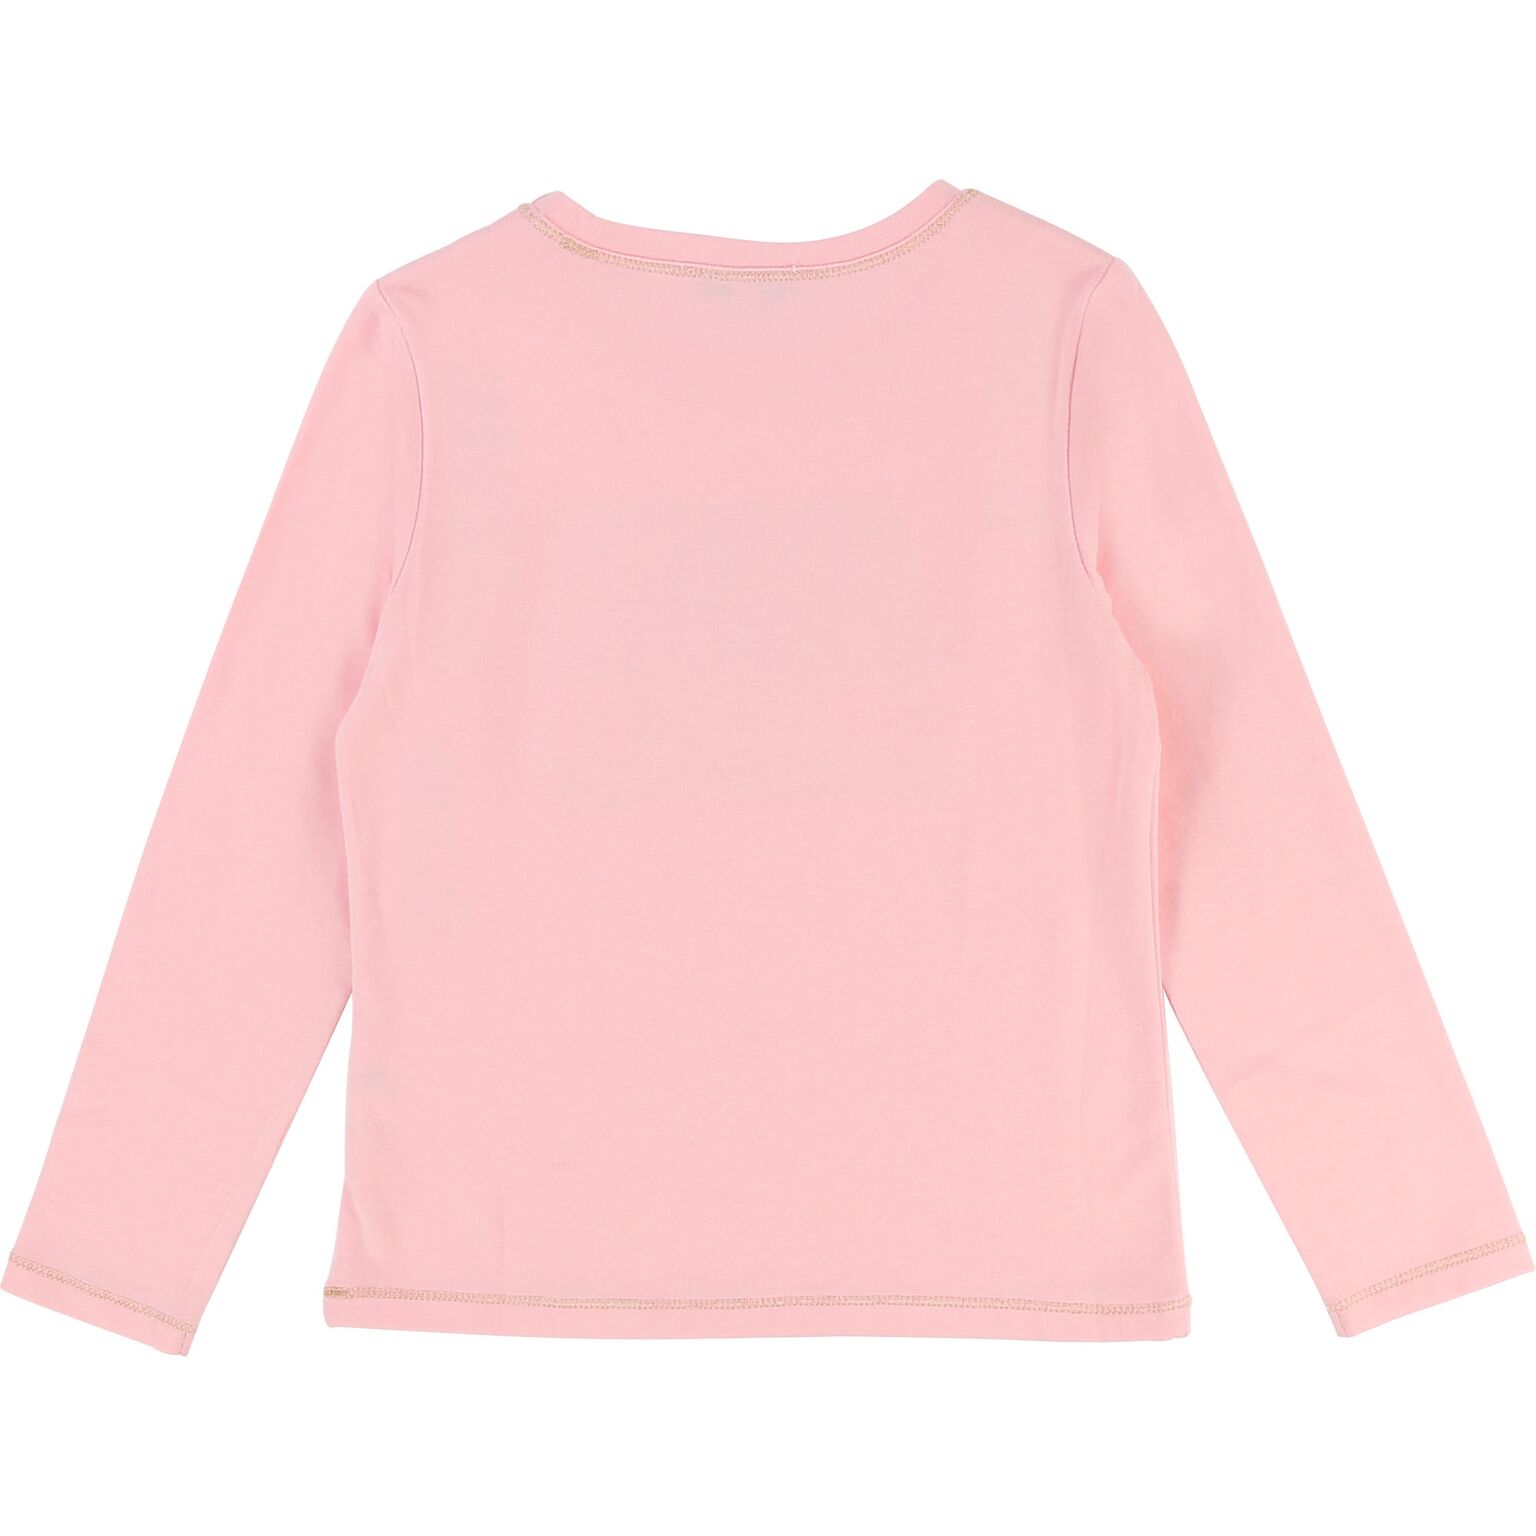 Little Marc Jacobs AW18 Long Sleeve T-Shirt Pink - Leo & Bella